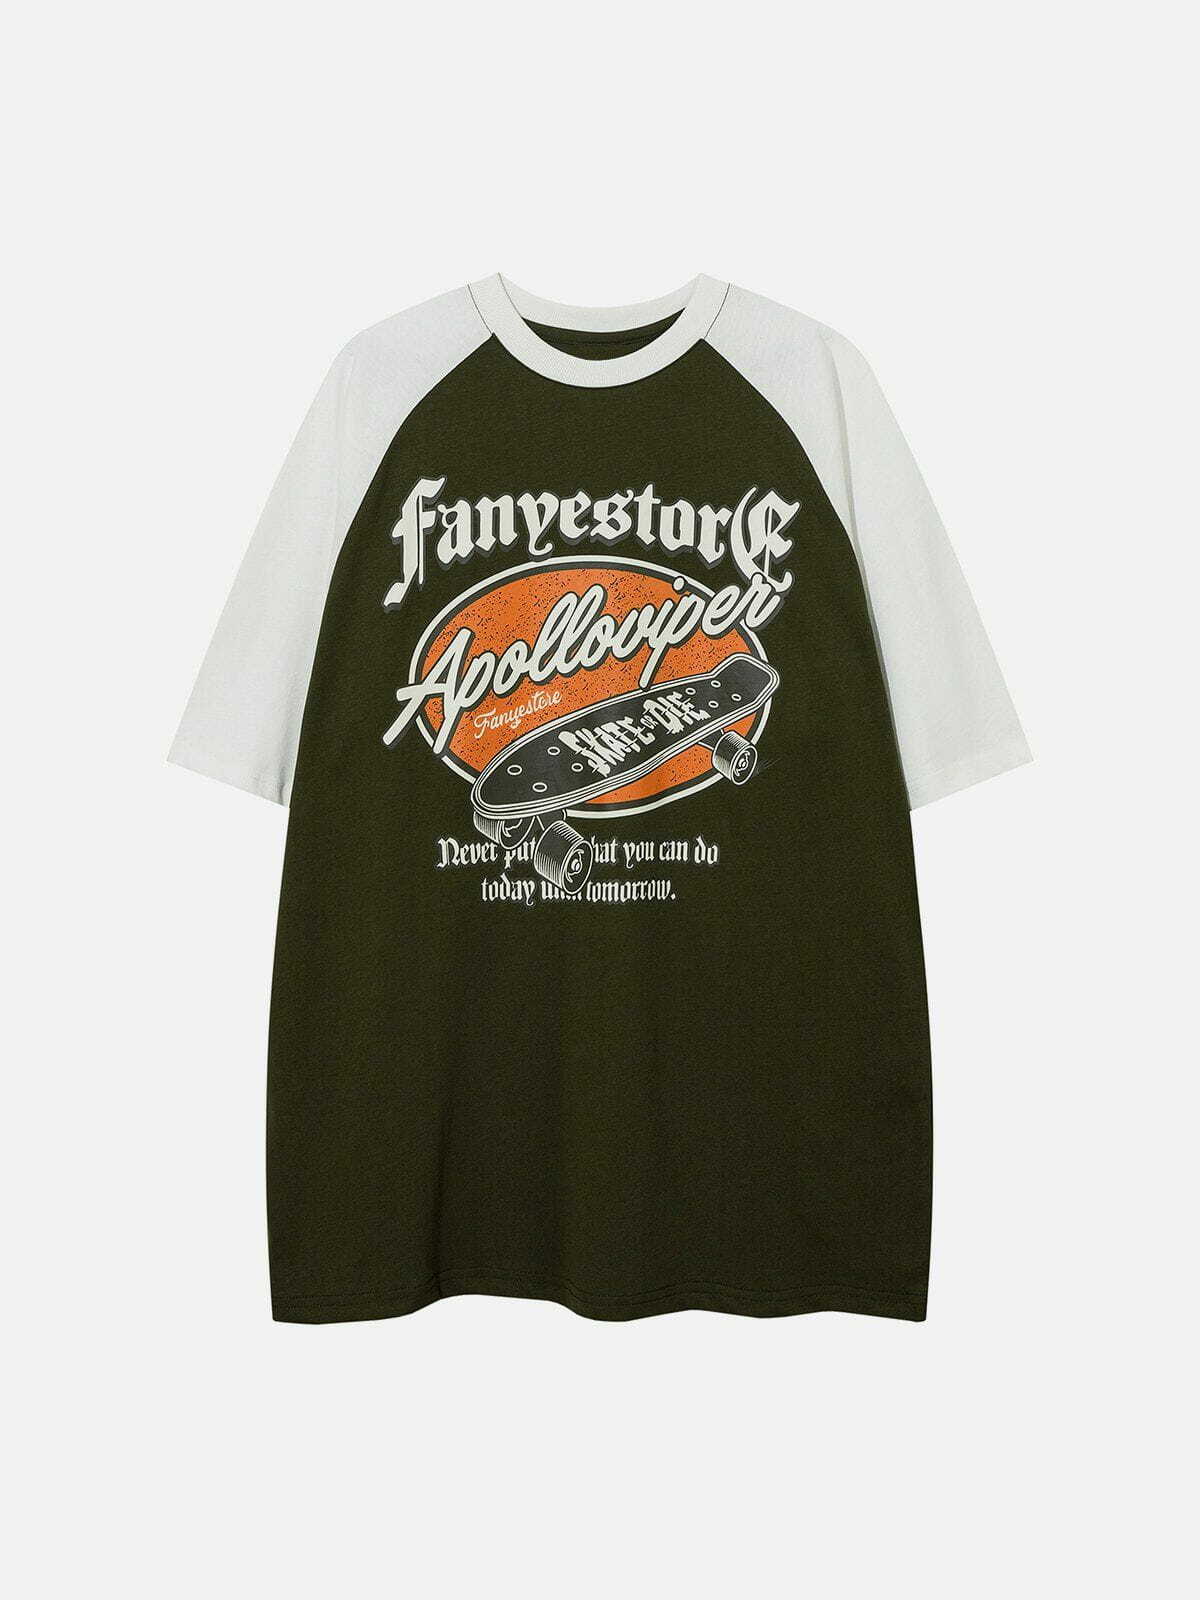 vintage skateboard graphic tee edgy retro streetwear shirt 8511